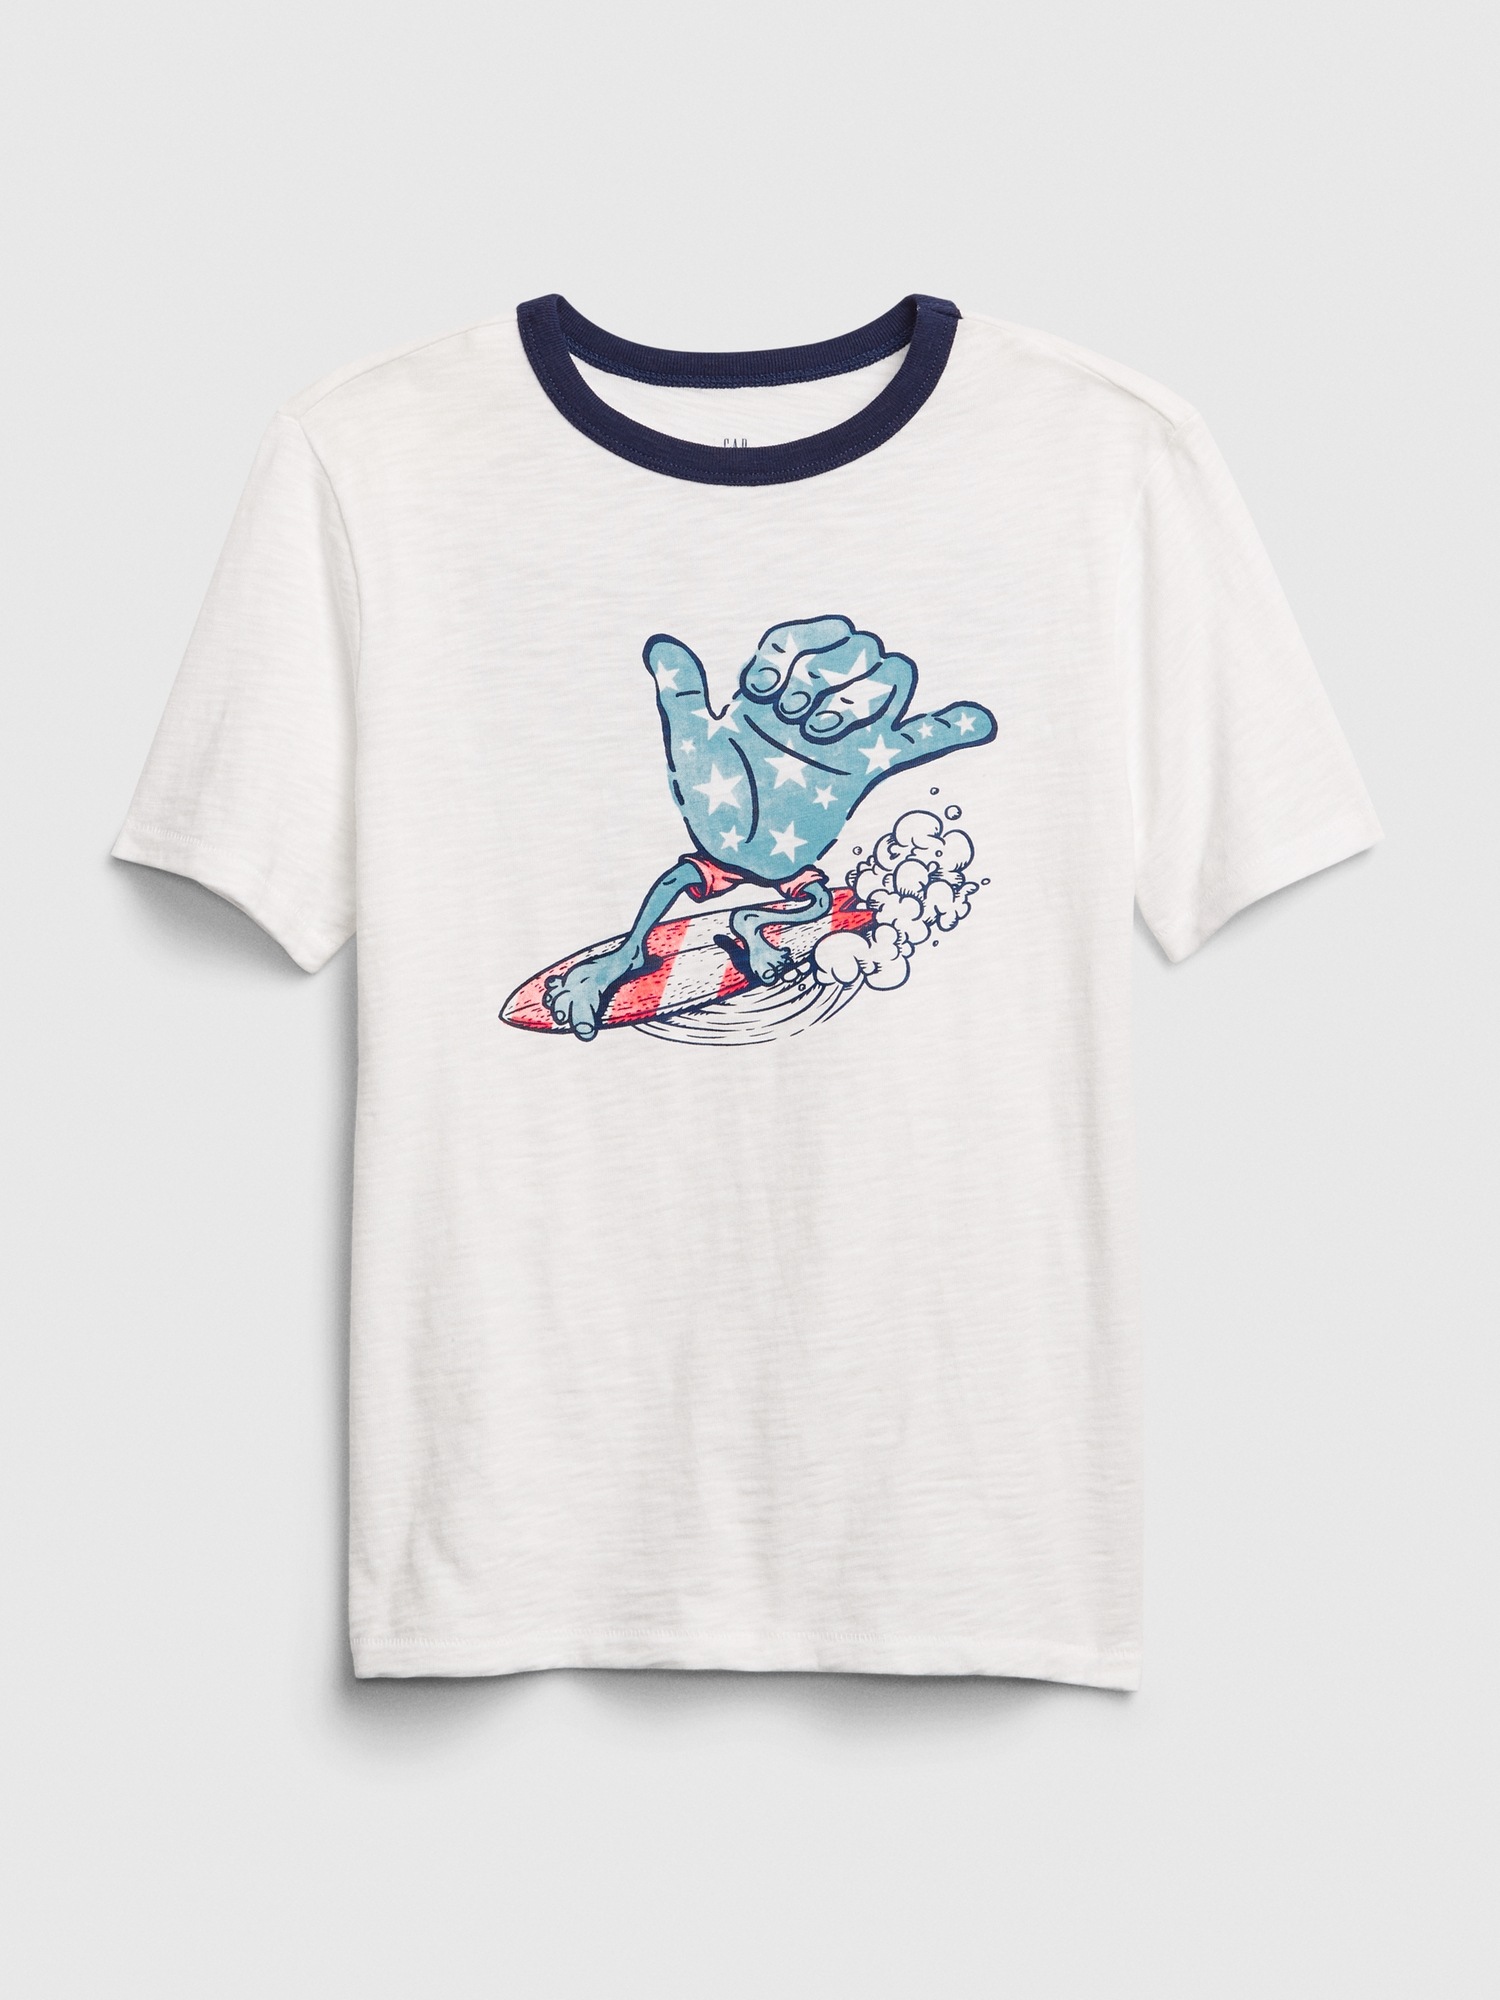 Kids Graphic T Shirt Gap - kids roblox t shirt gap